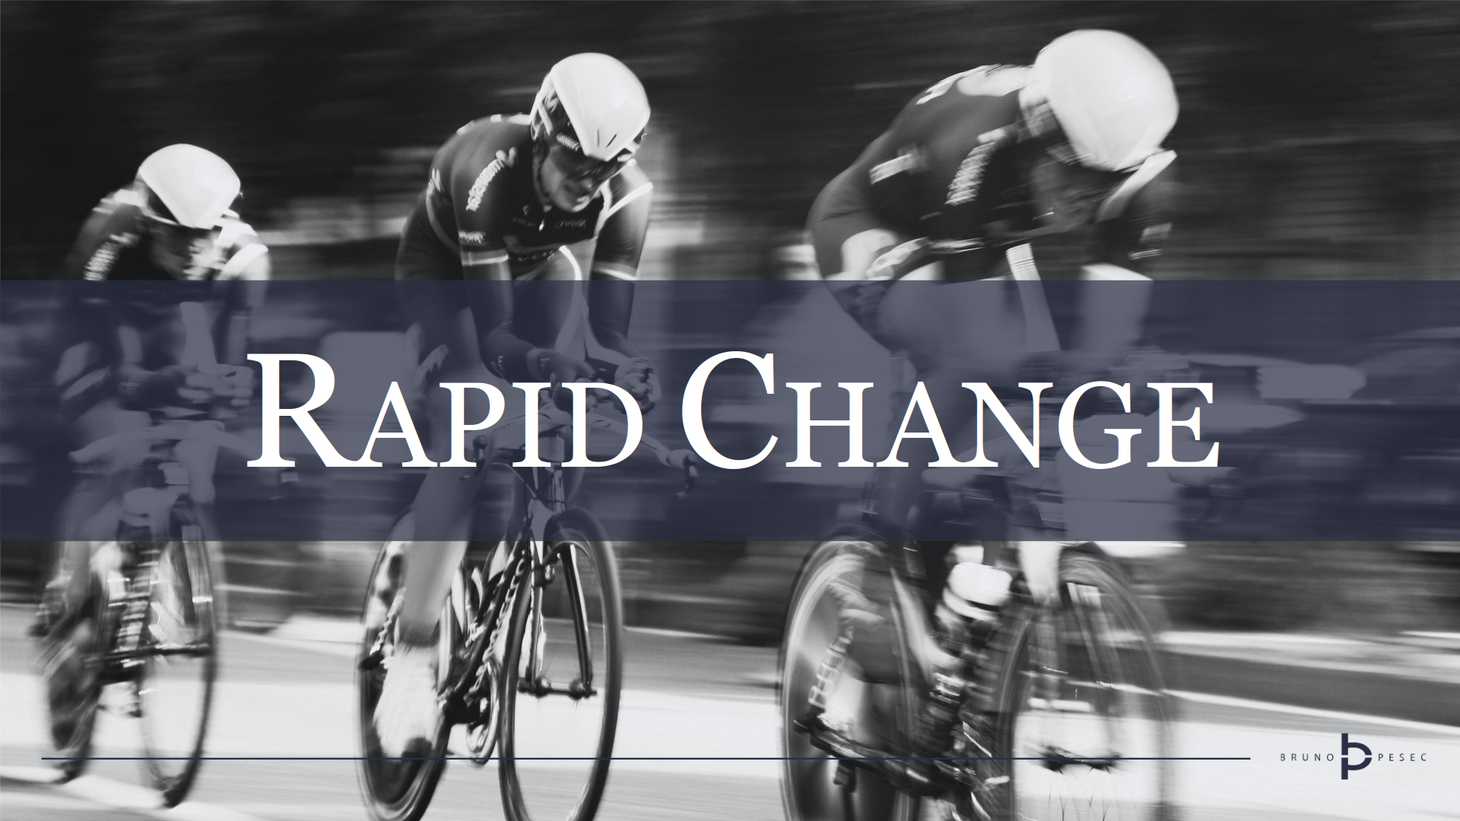 Rapid change